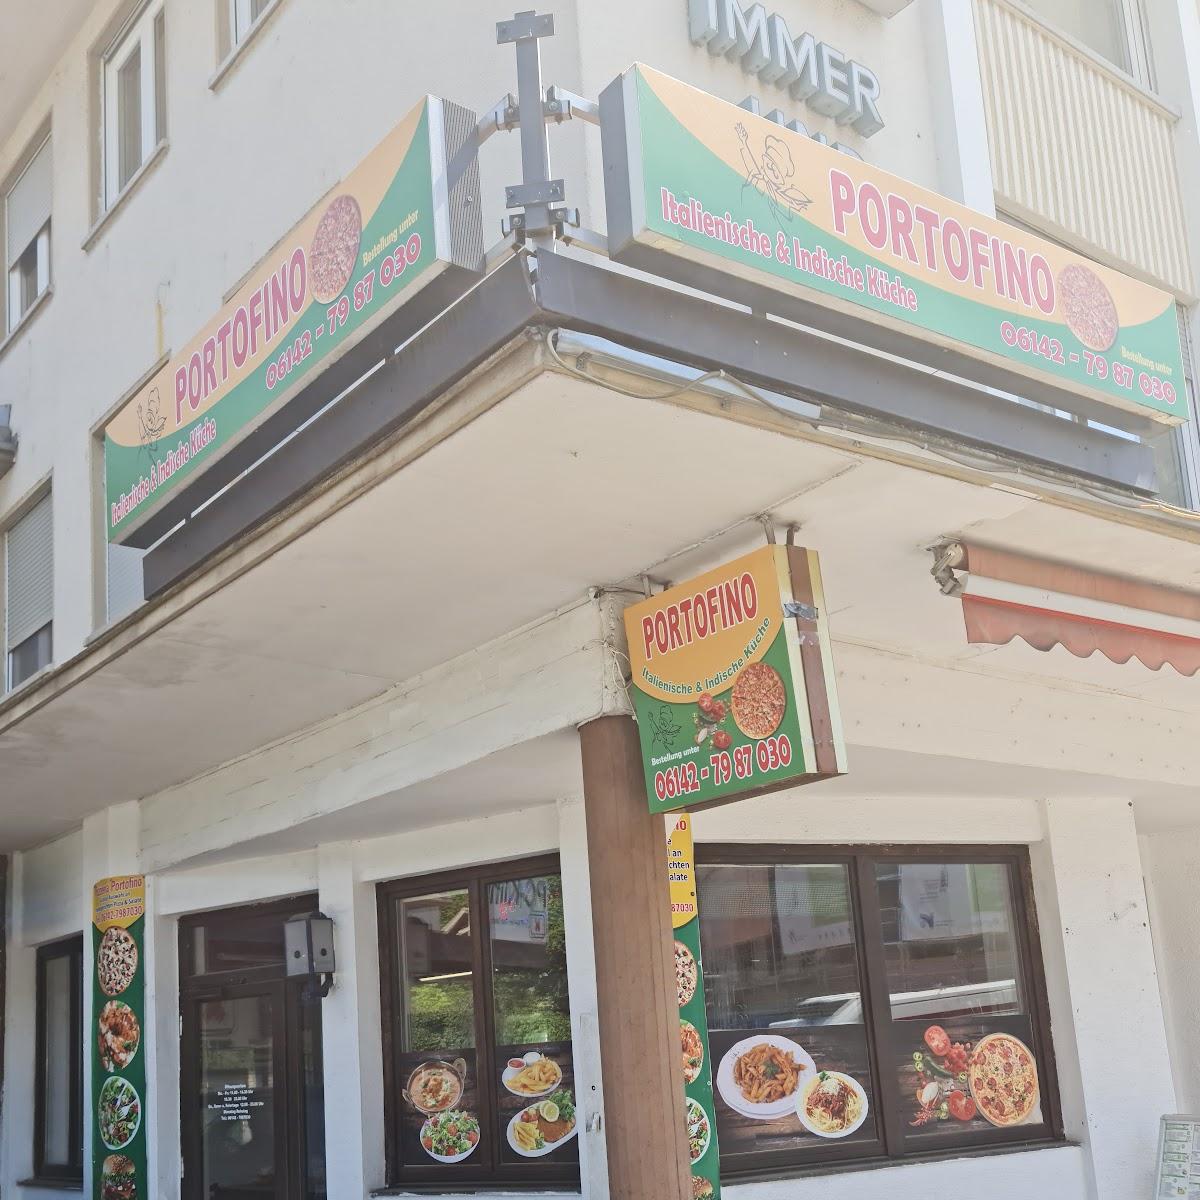 Restaurant "La Vera Pizzeria Kebab" in Rüsselsheim am Main